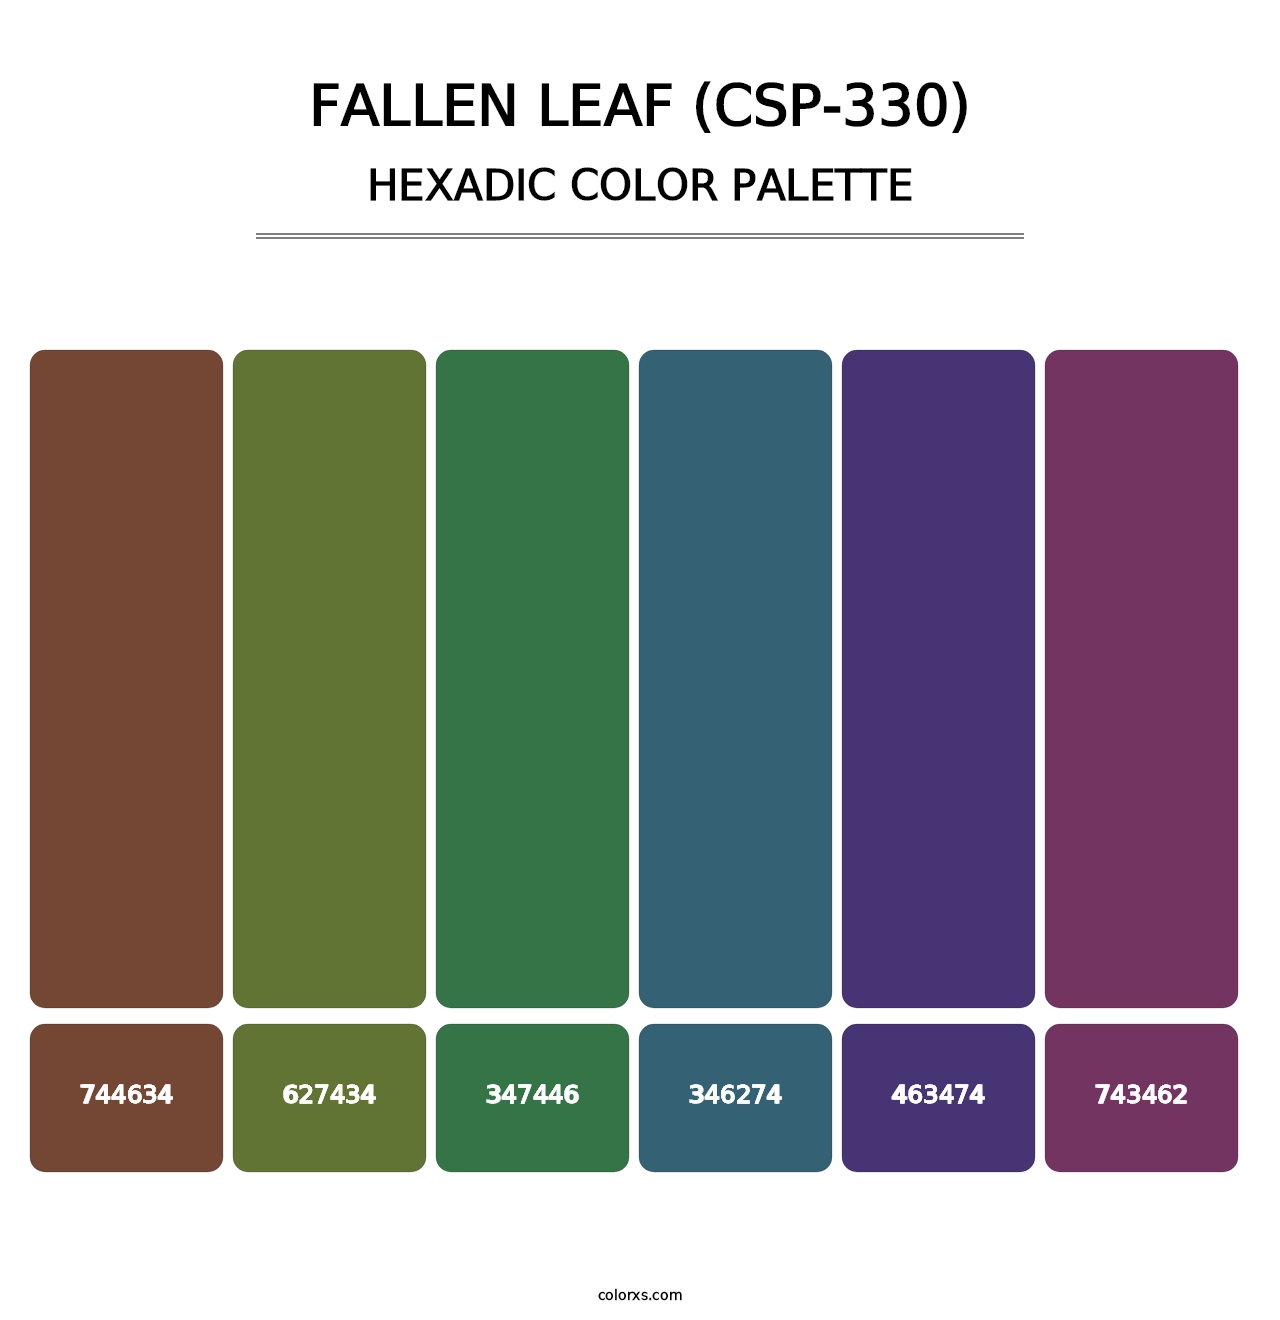 Fallen Leaf (CSP-330) - Hexadic Color Palette